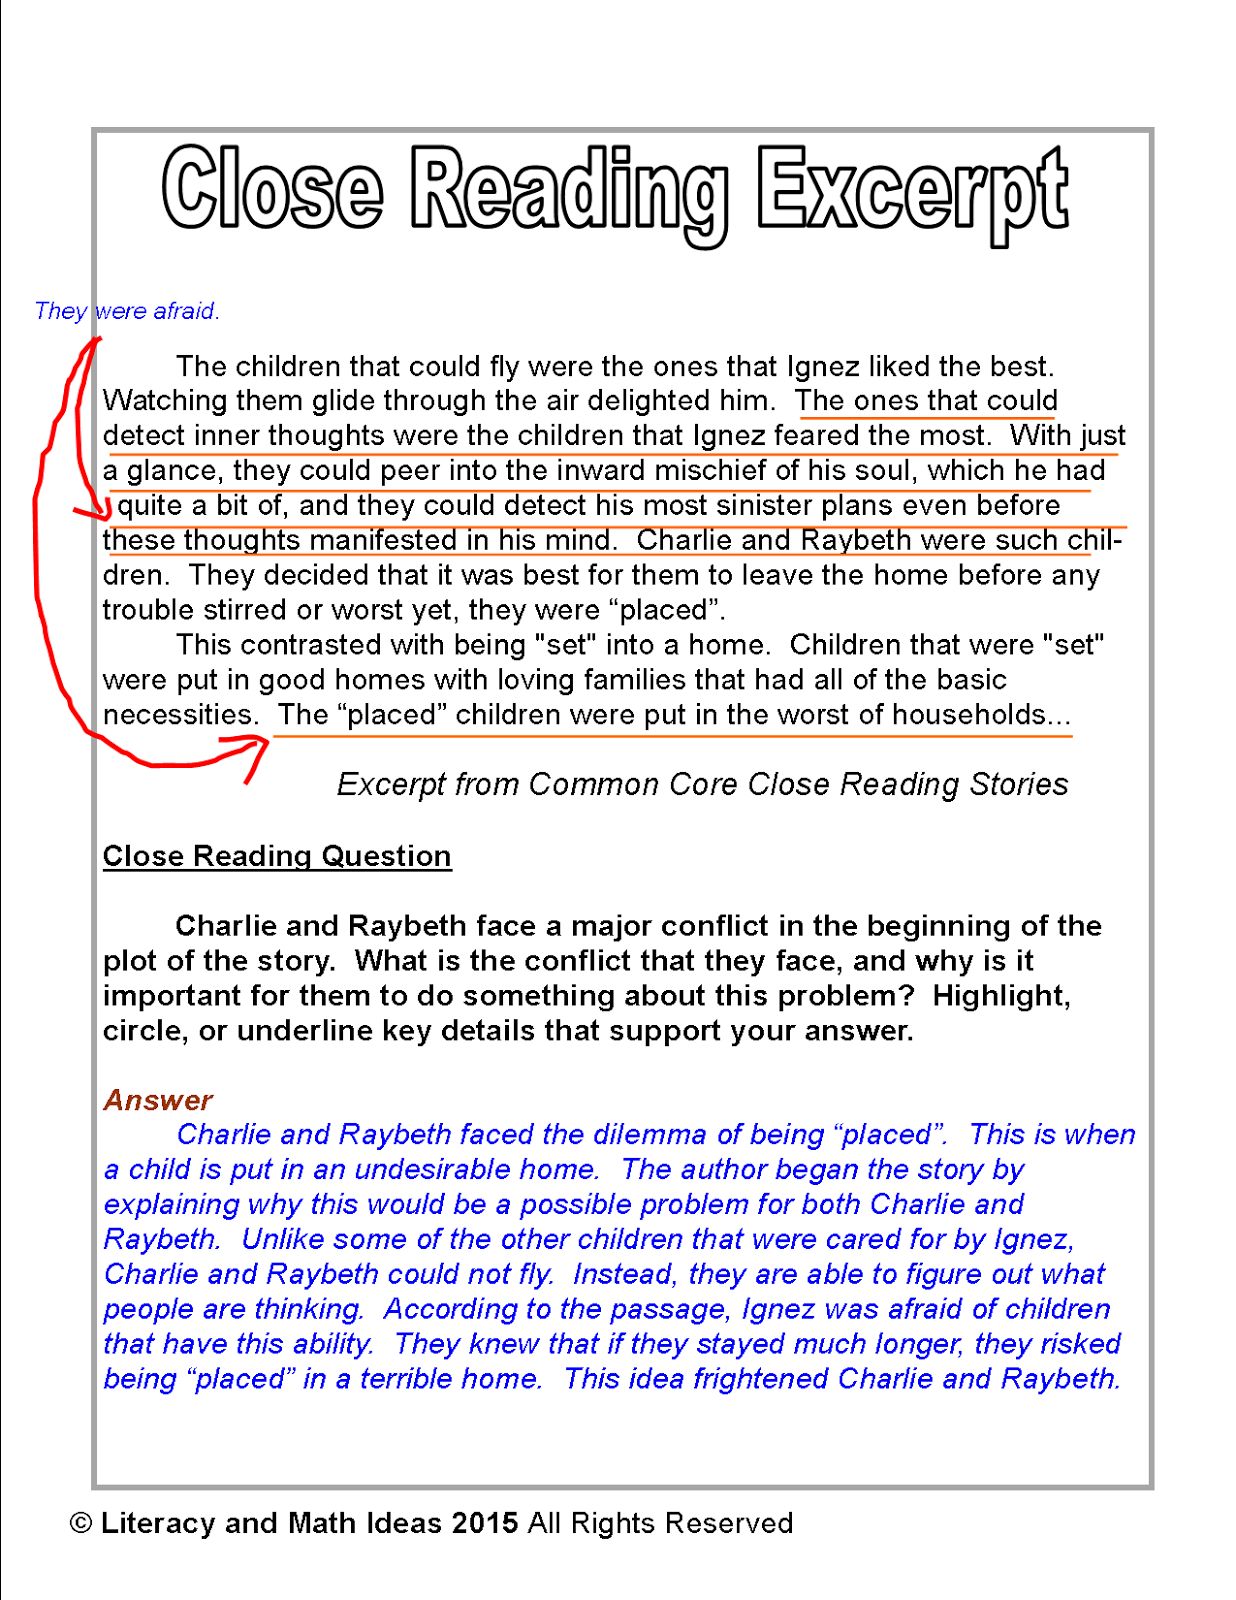 close reading essay example pdf